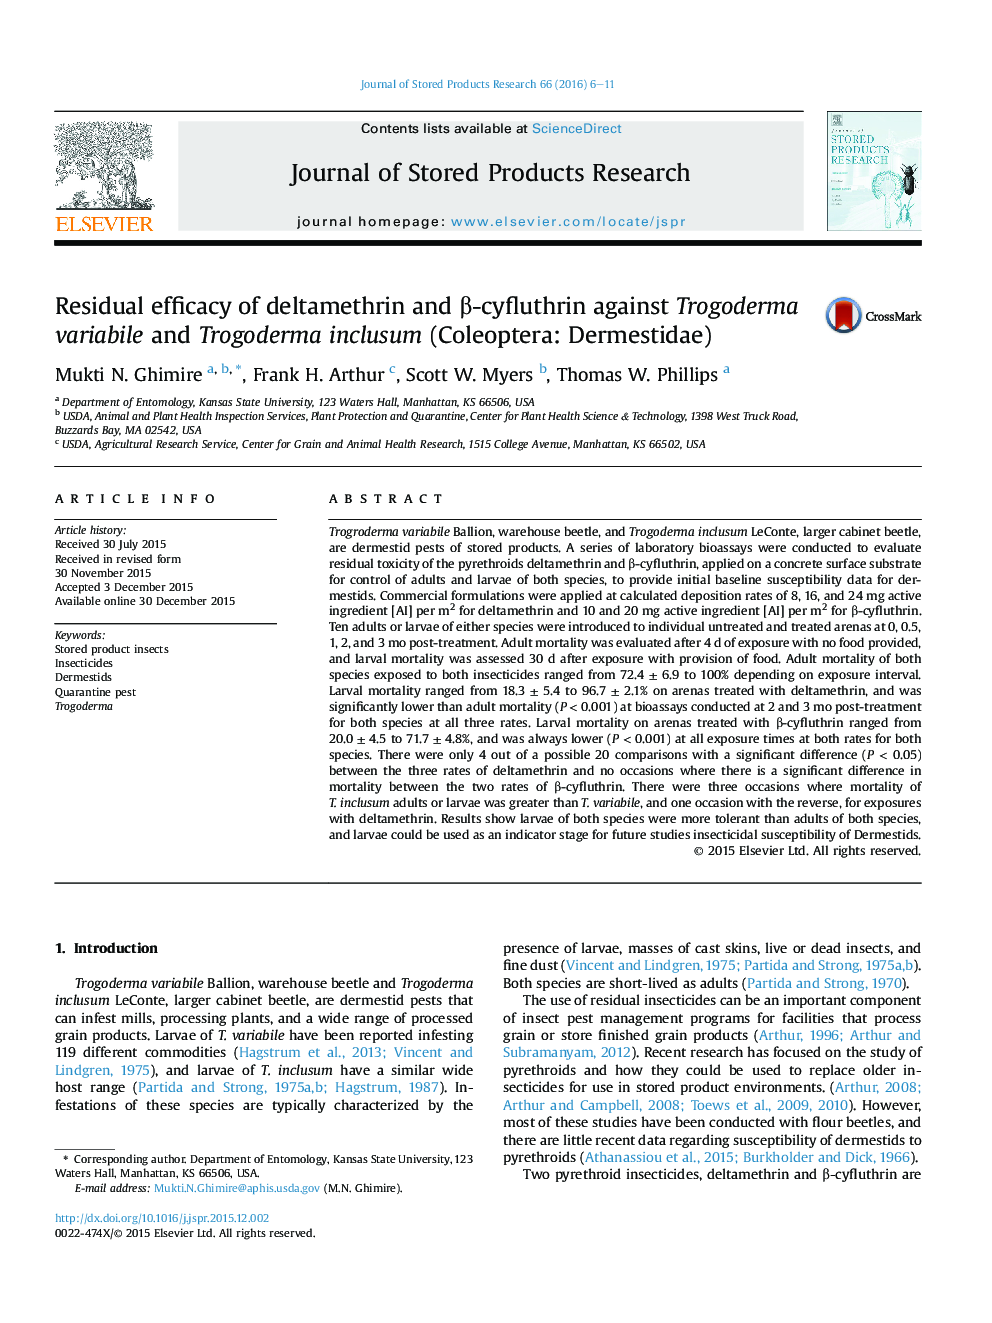 Residual efficacy of deltamethrin and β-cyfluthrin against Trogoderma variabile and Trogoderma inclusum (Coleoptera: Dermestidae)